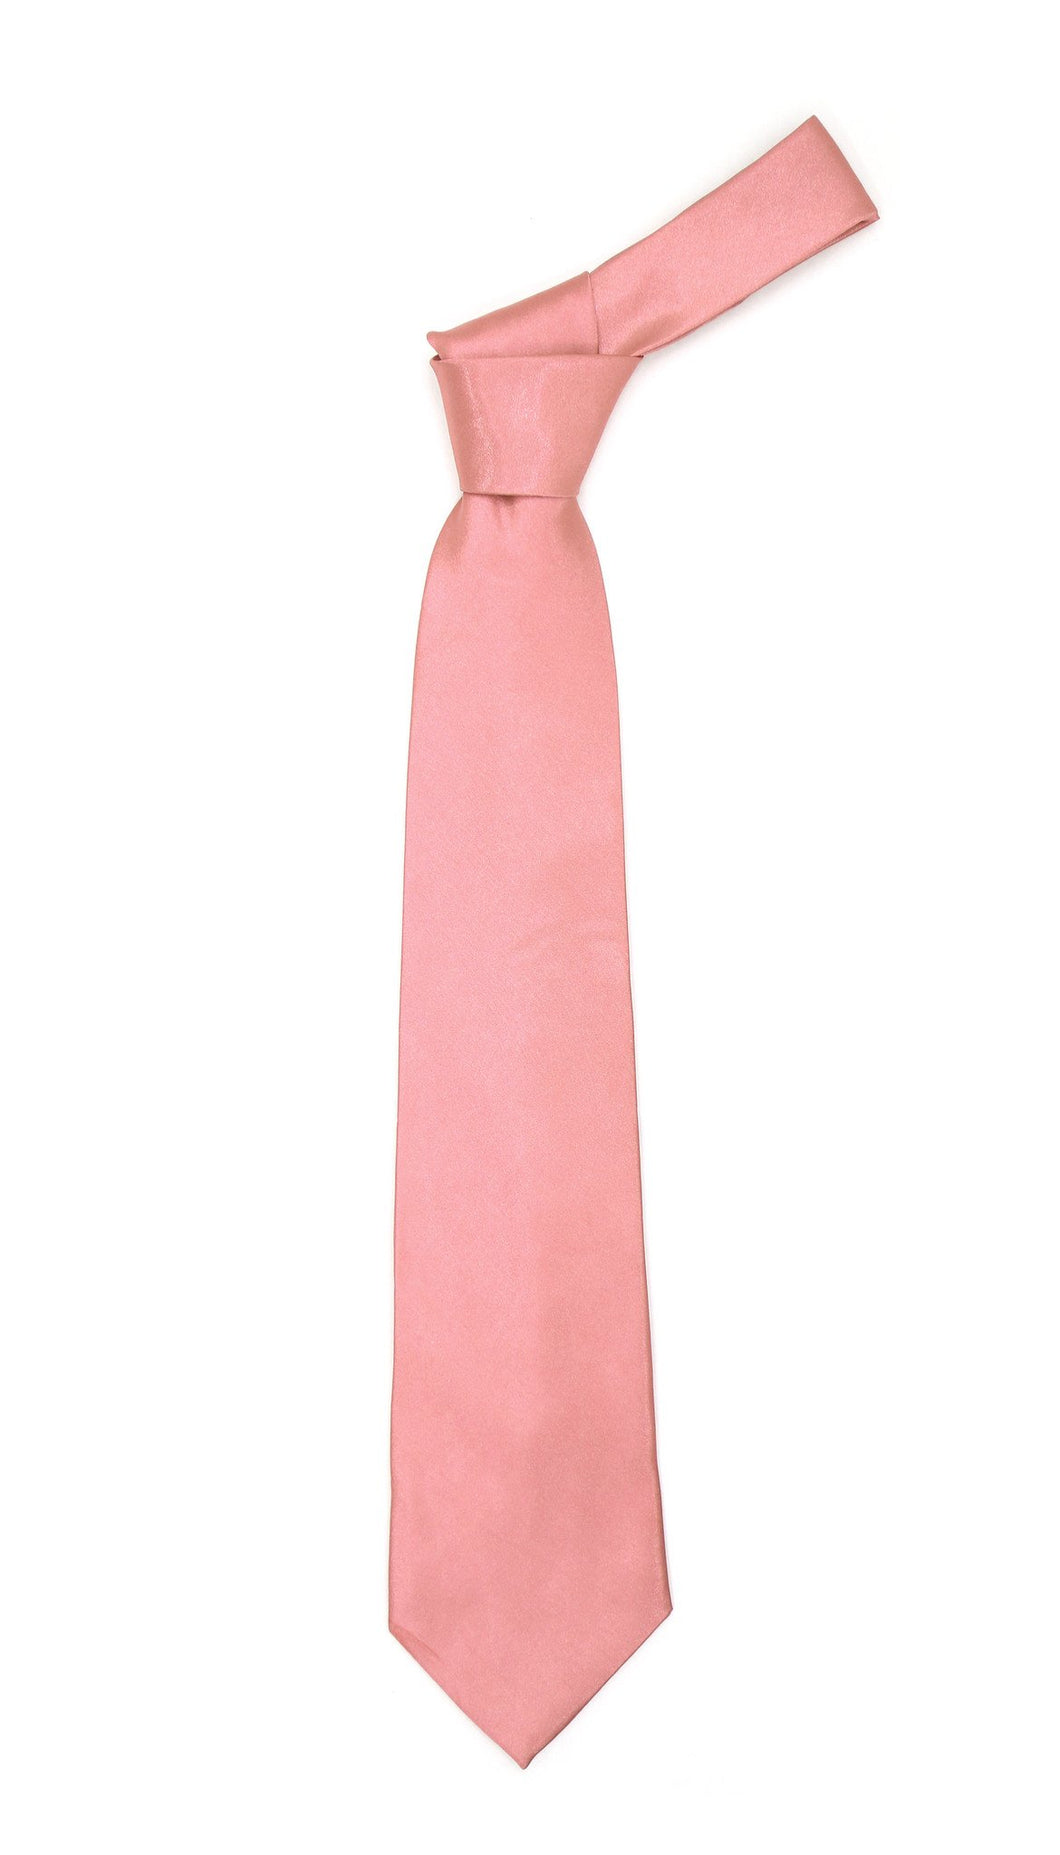 Premium Microfiber Baby Pink Necktie - Ferrecci USA 